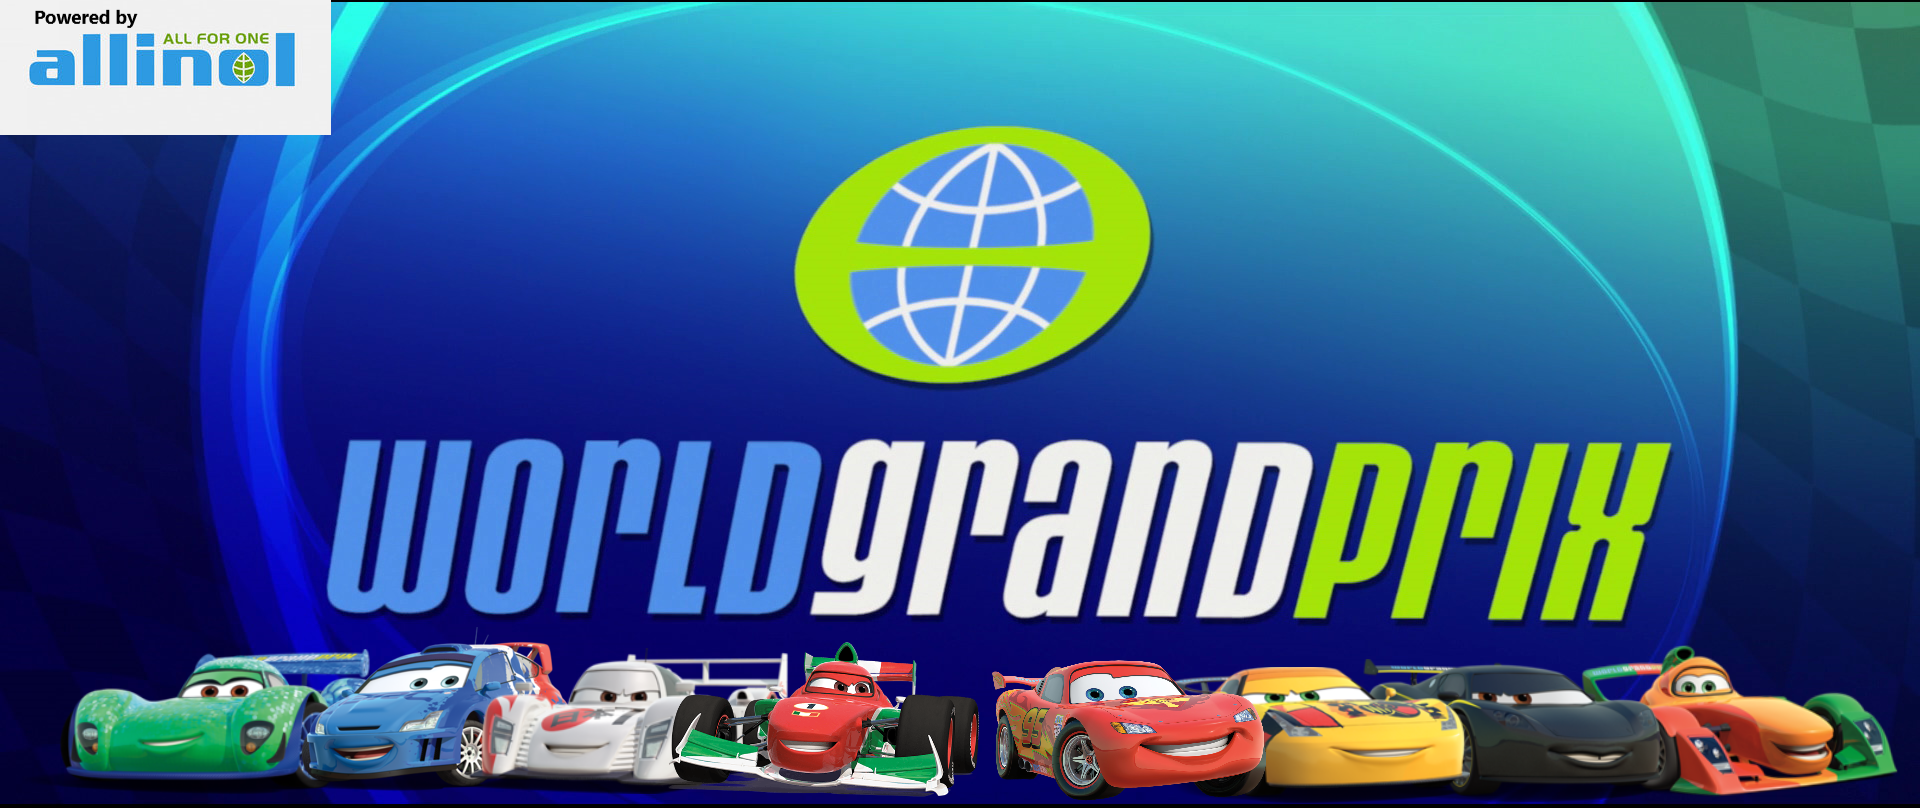 World Grand Prix By Landyngunderfan On Deviantart